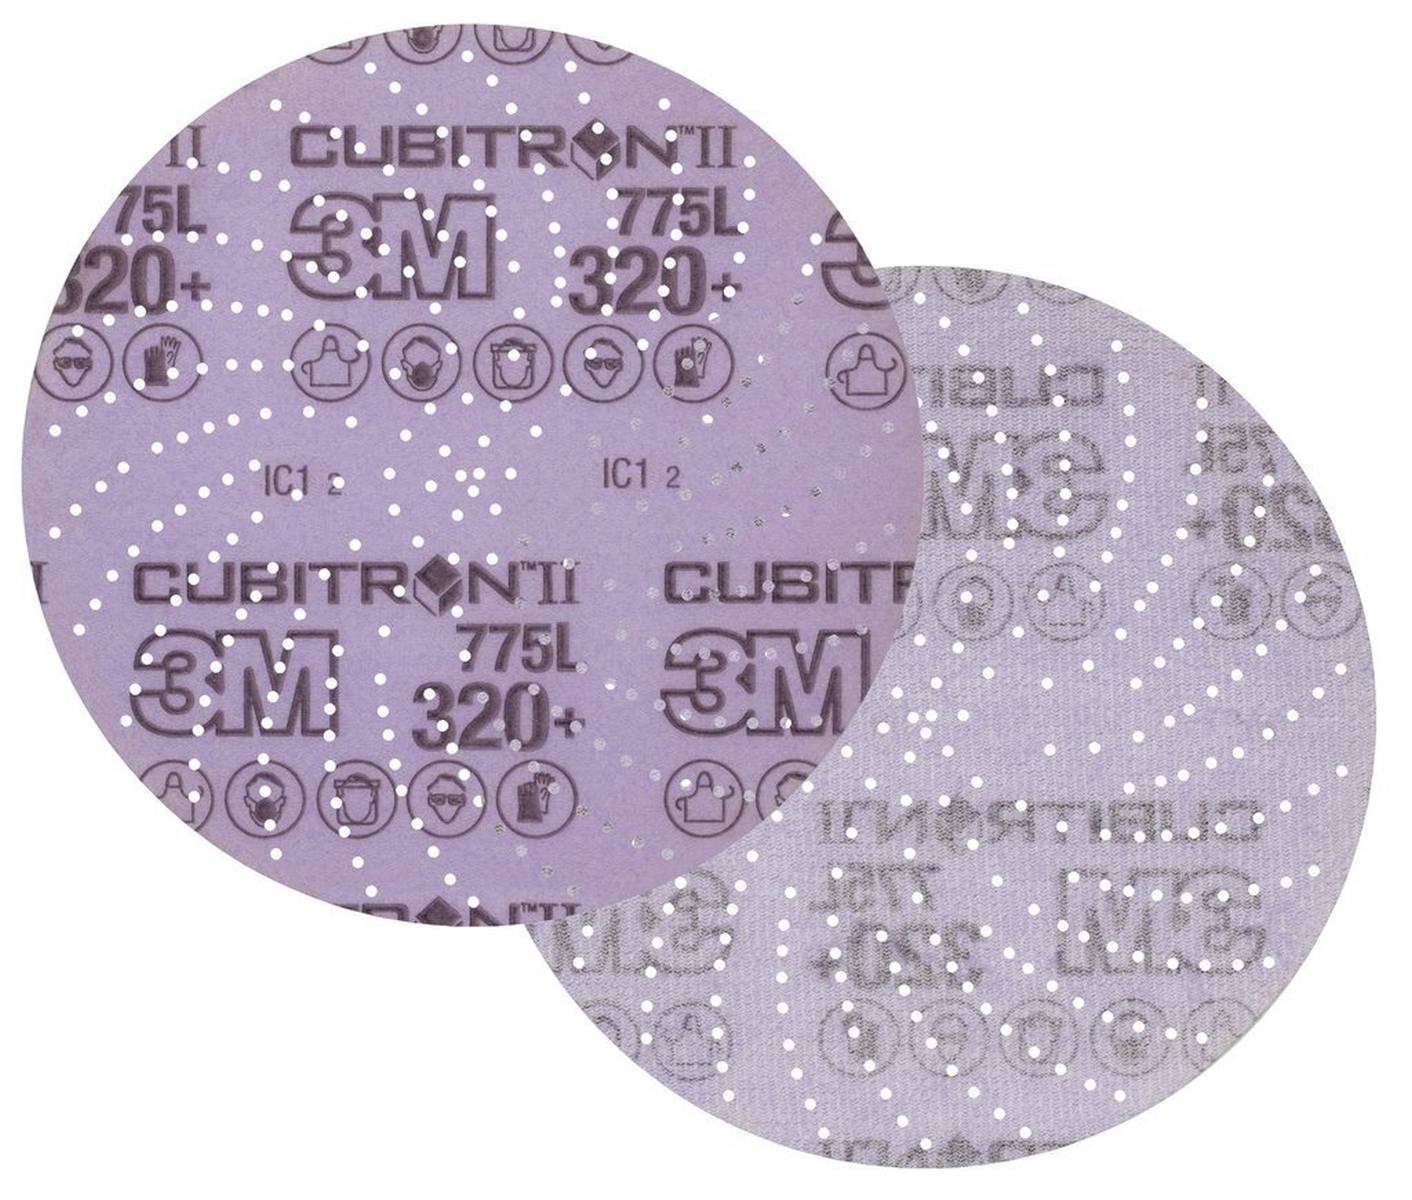 3M Cubitron II Hookit film disc 775L, 150 mm, 320+, multihole #47082